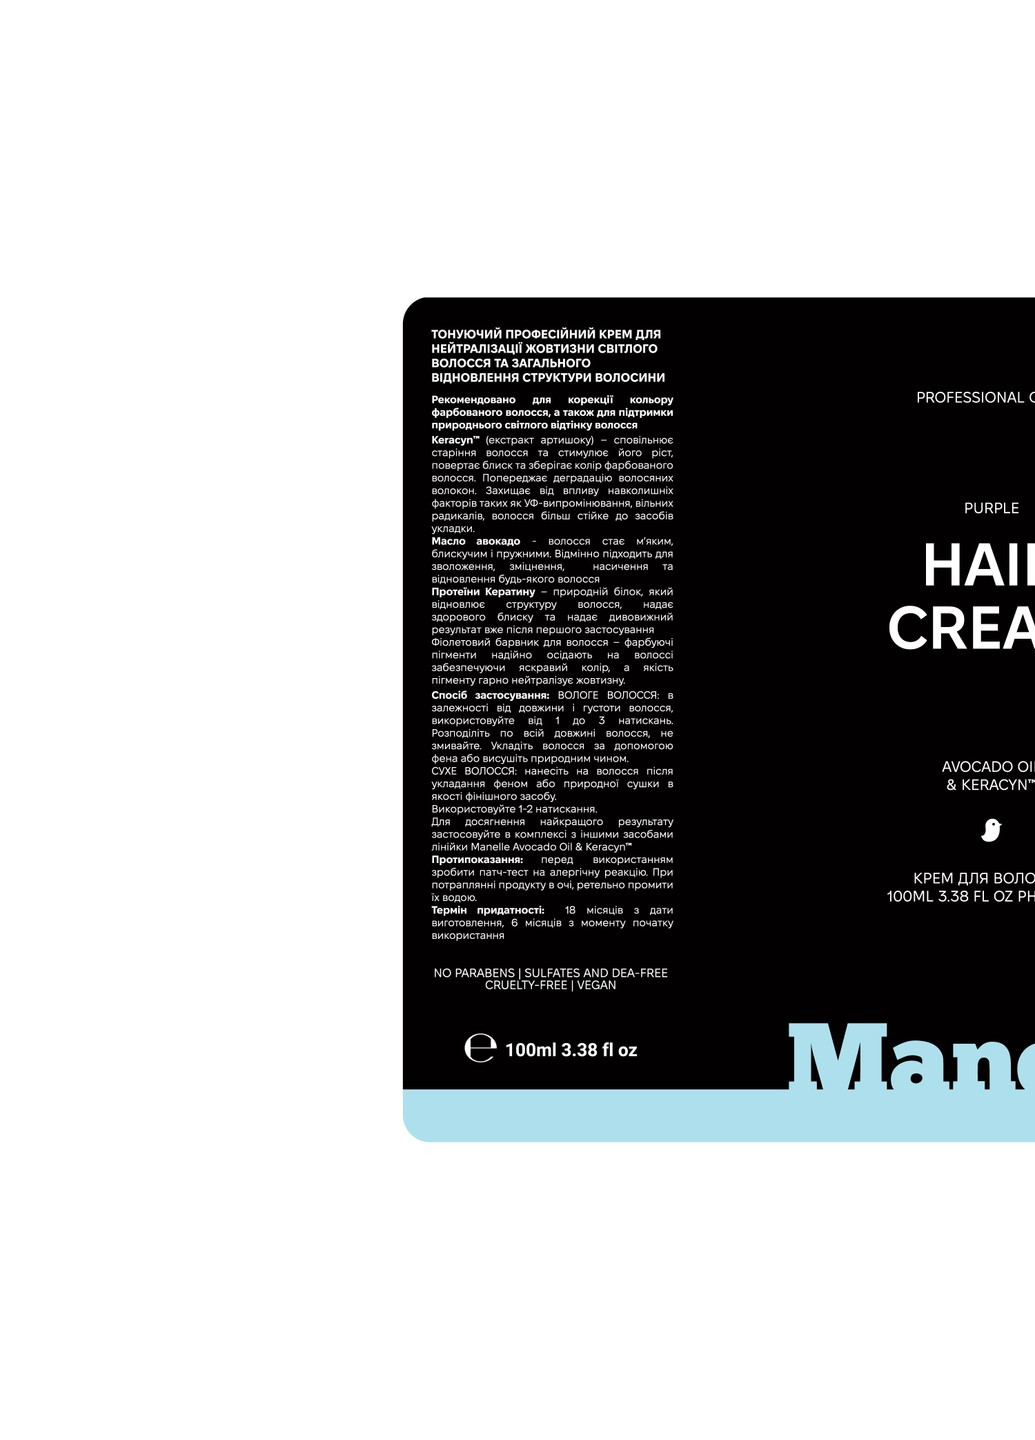 Крем для окрашенных волос Рrofessional care - Avocado Oil & Keracyn 100 мл Manelle (276844235)